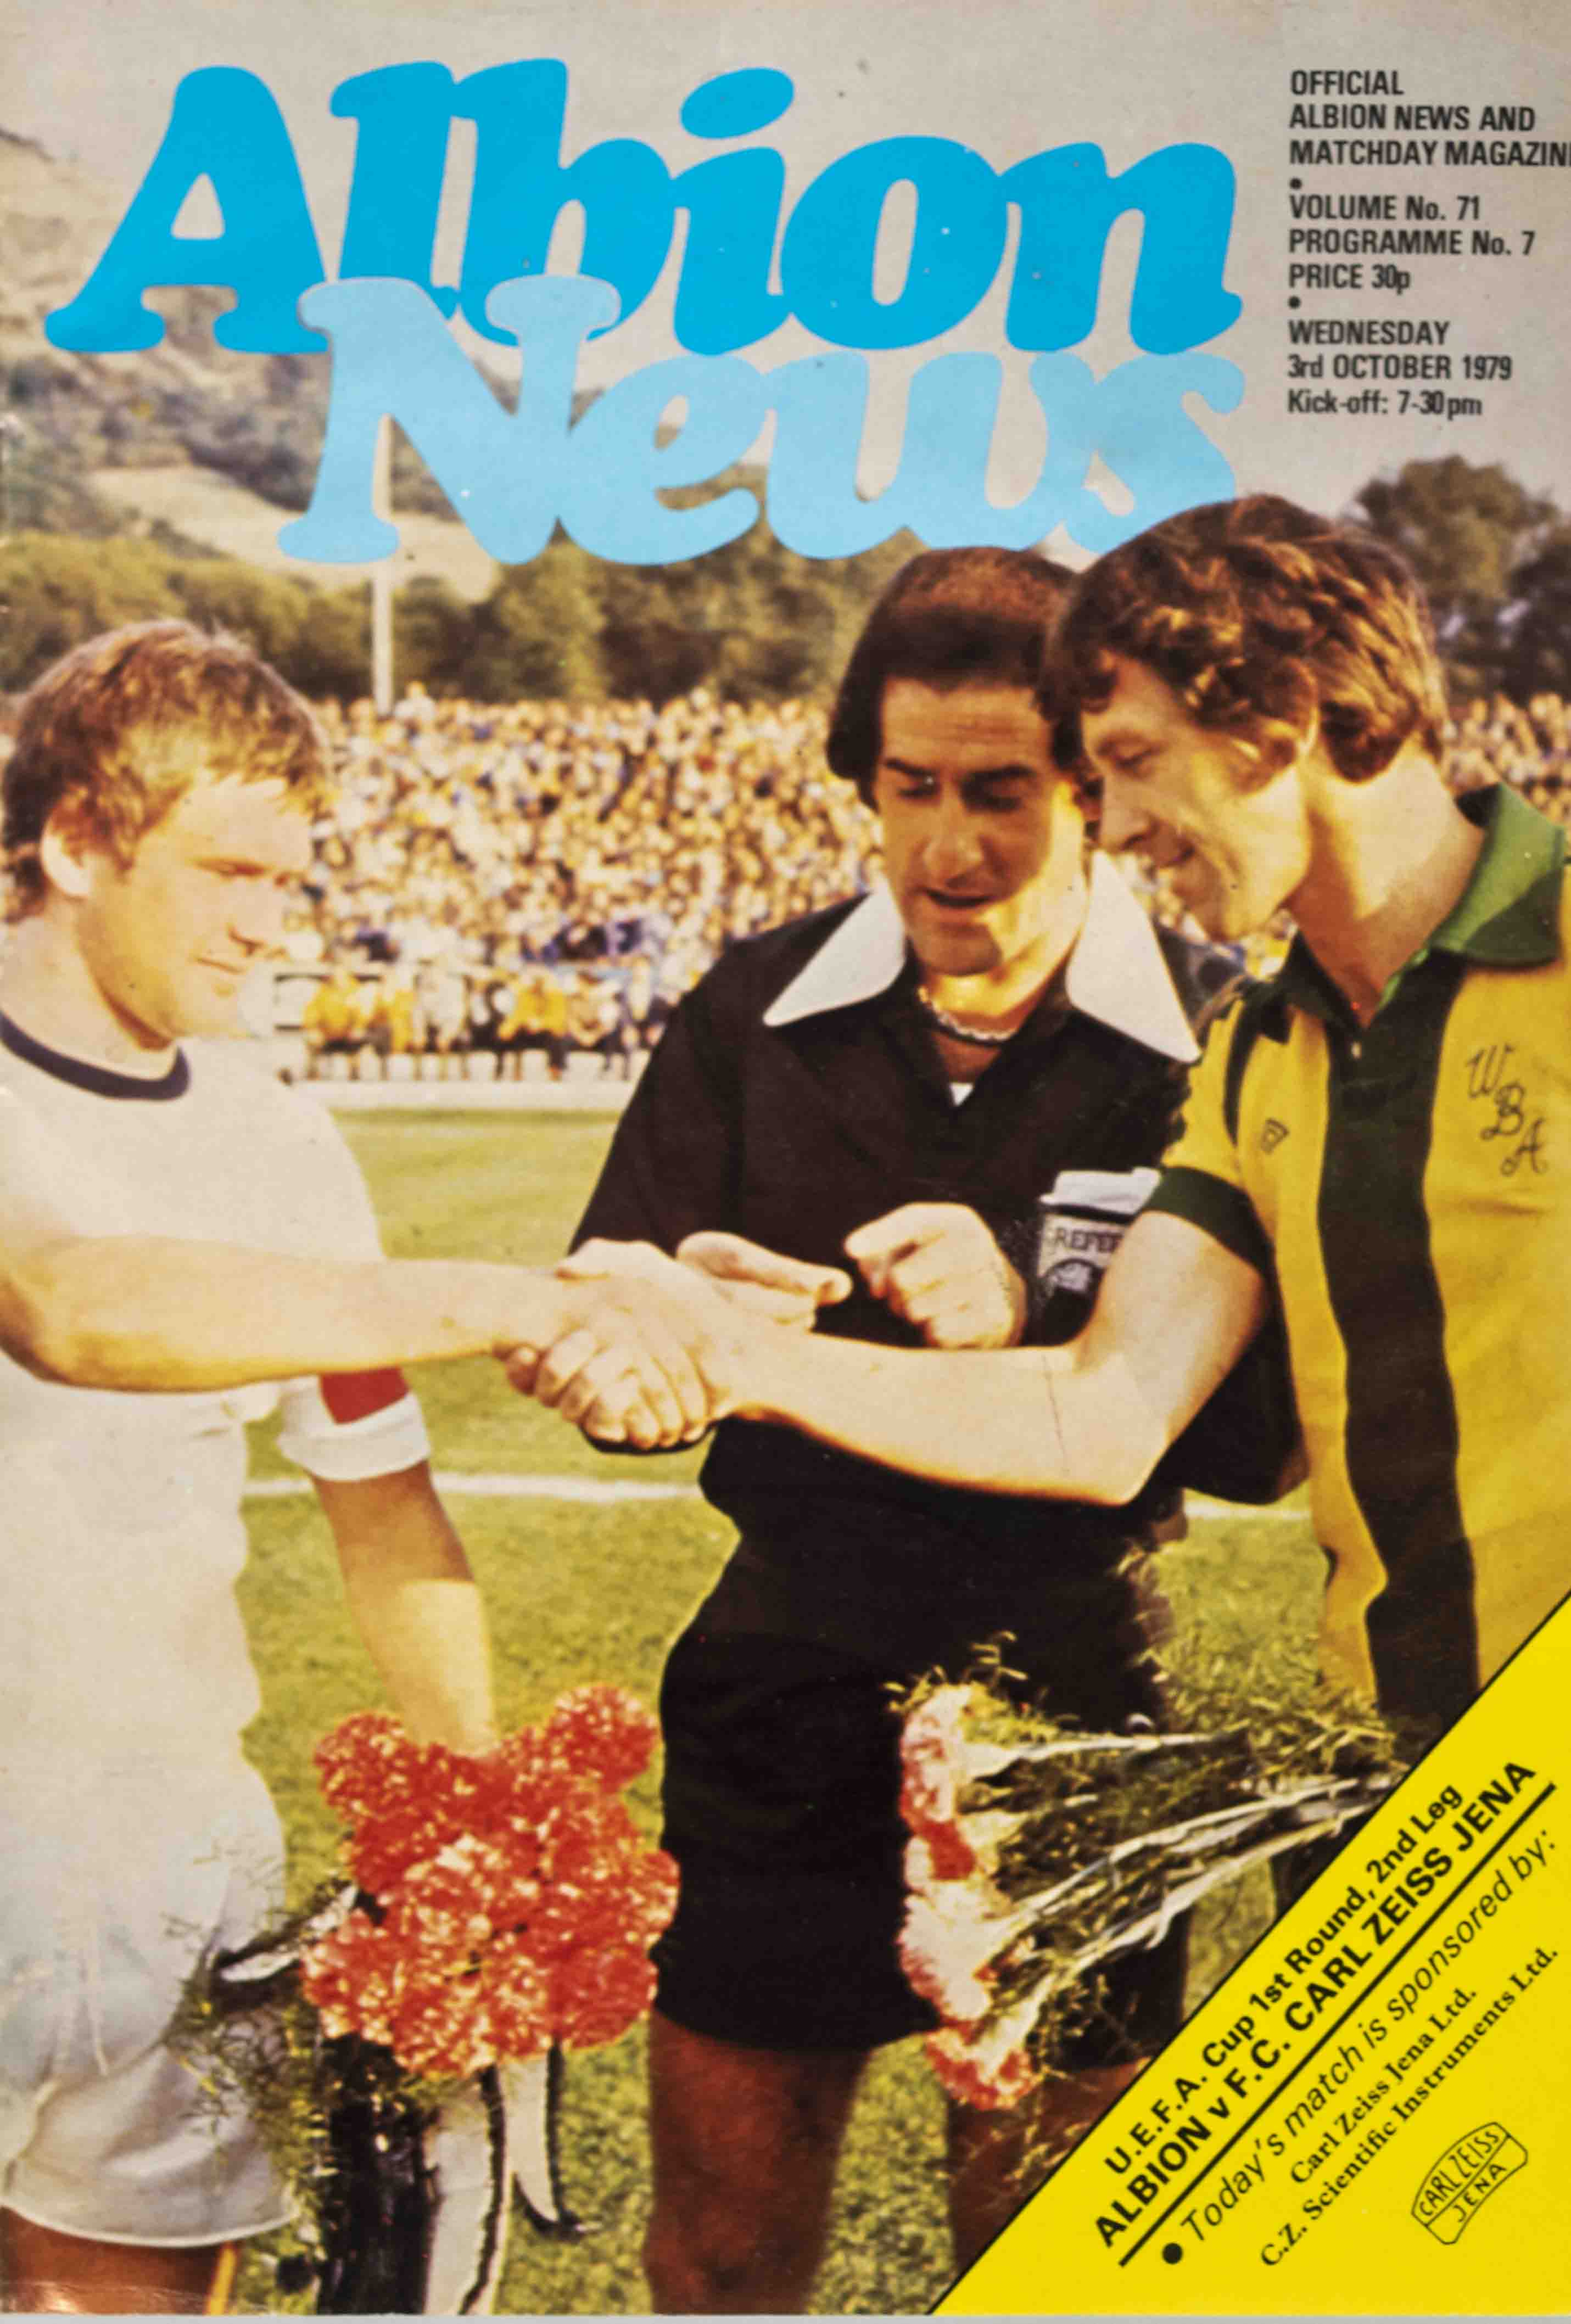 Program, Albion F.C. v. Carl Zeiss jena, EUFA, 1979